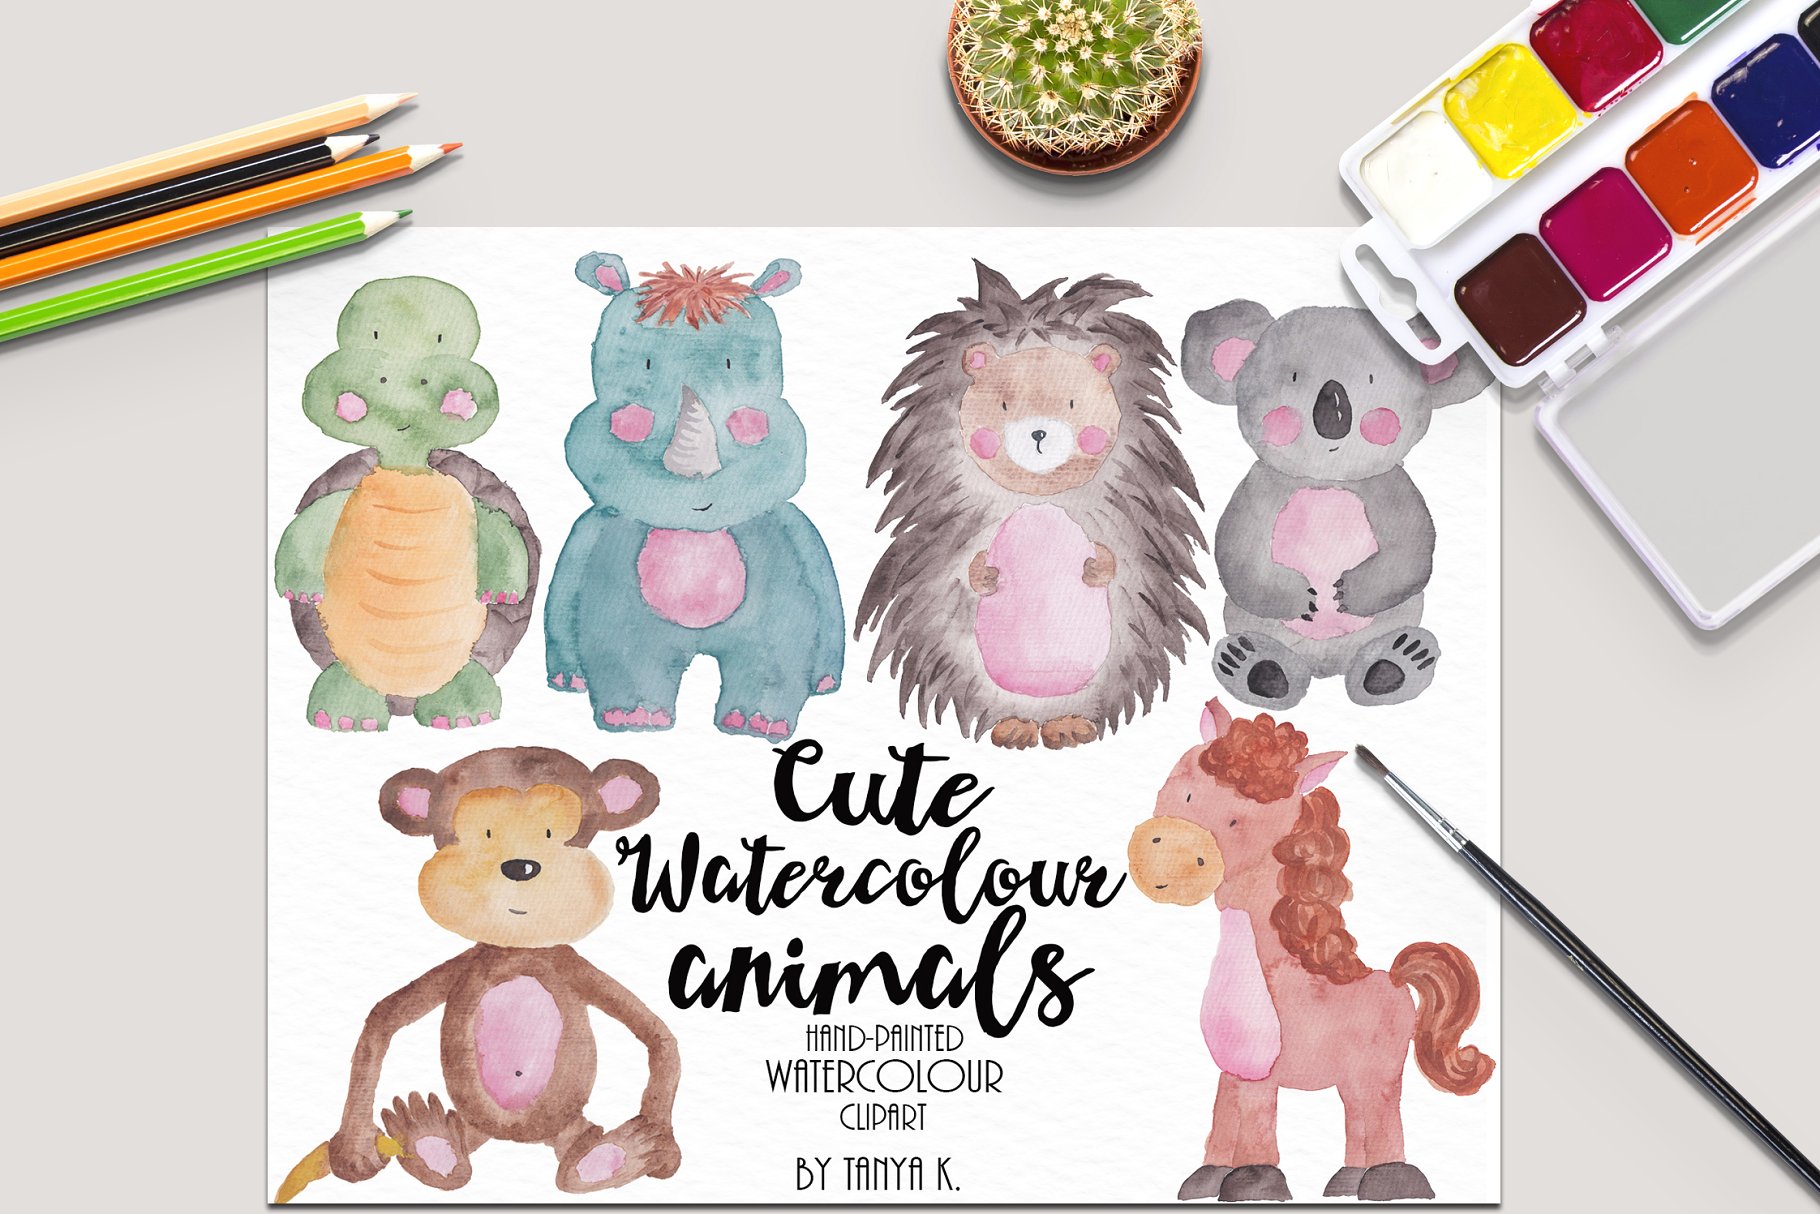 可爱卡通动物水彩剪贴画 Cute Watercolor animals clipart插图(1)